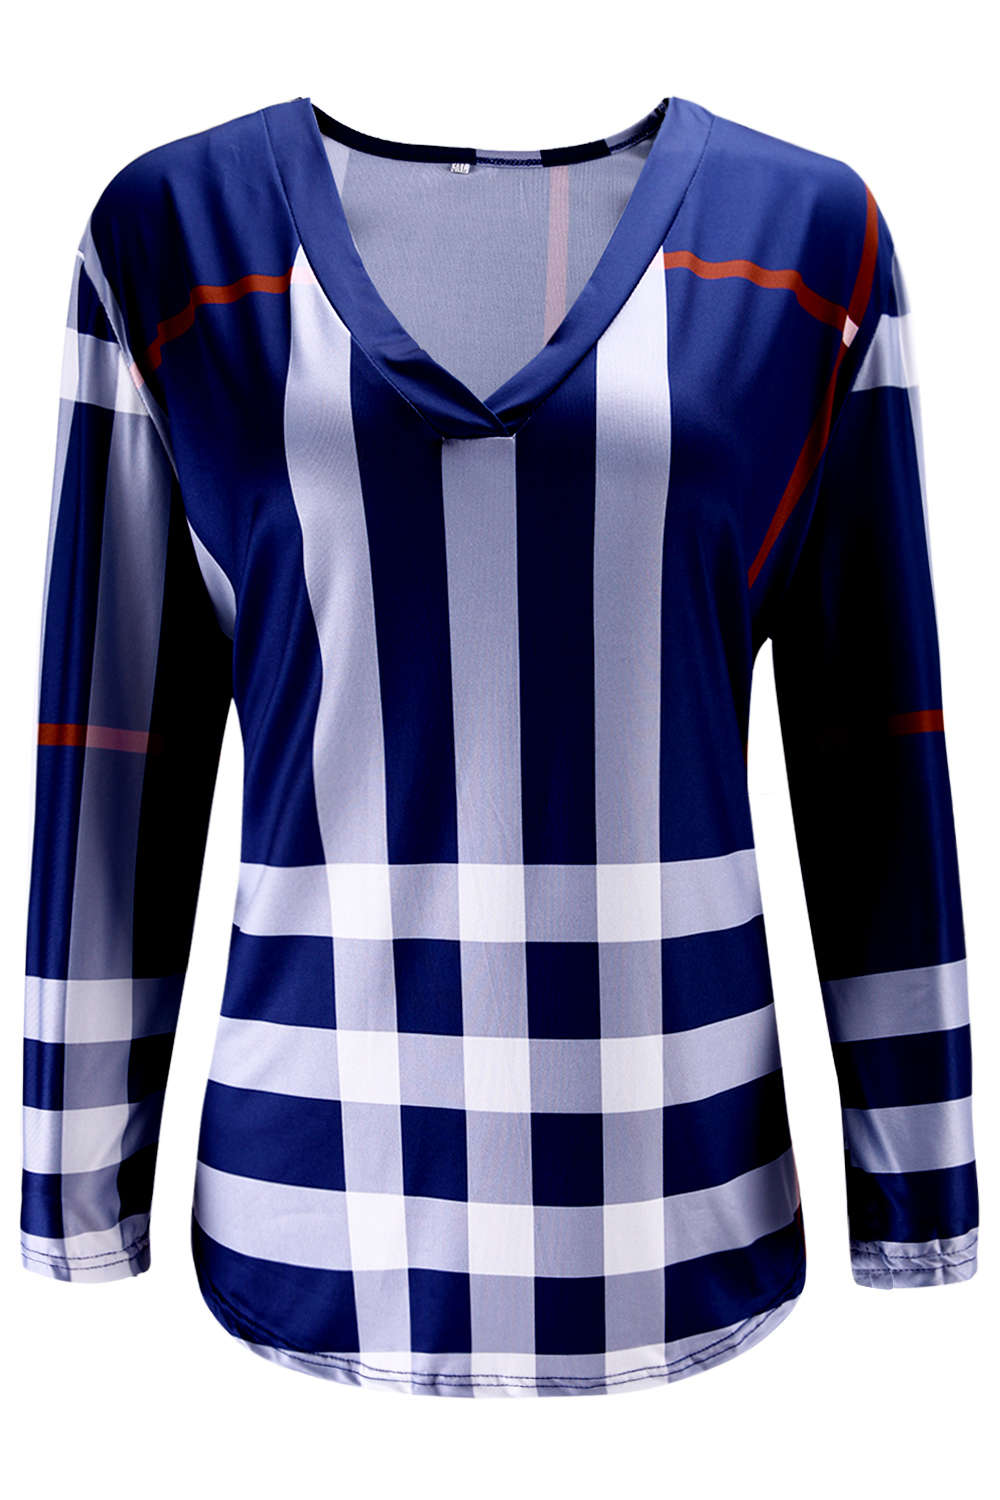 Iyasson Women's Plaid Print Hemden 3/4 Armel Bluse T-Shirt Oberteile Tops